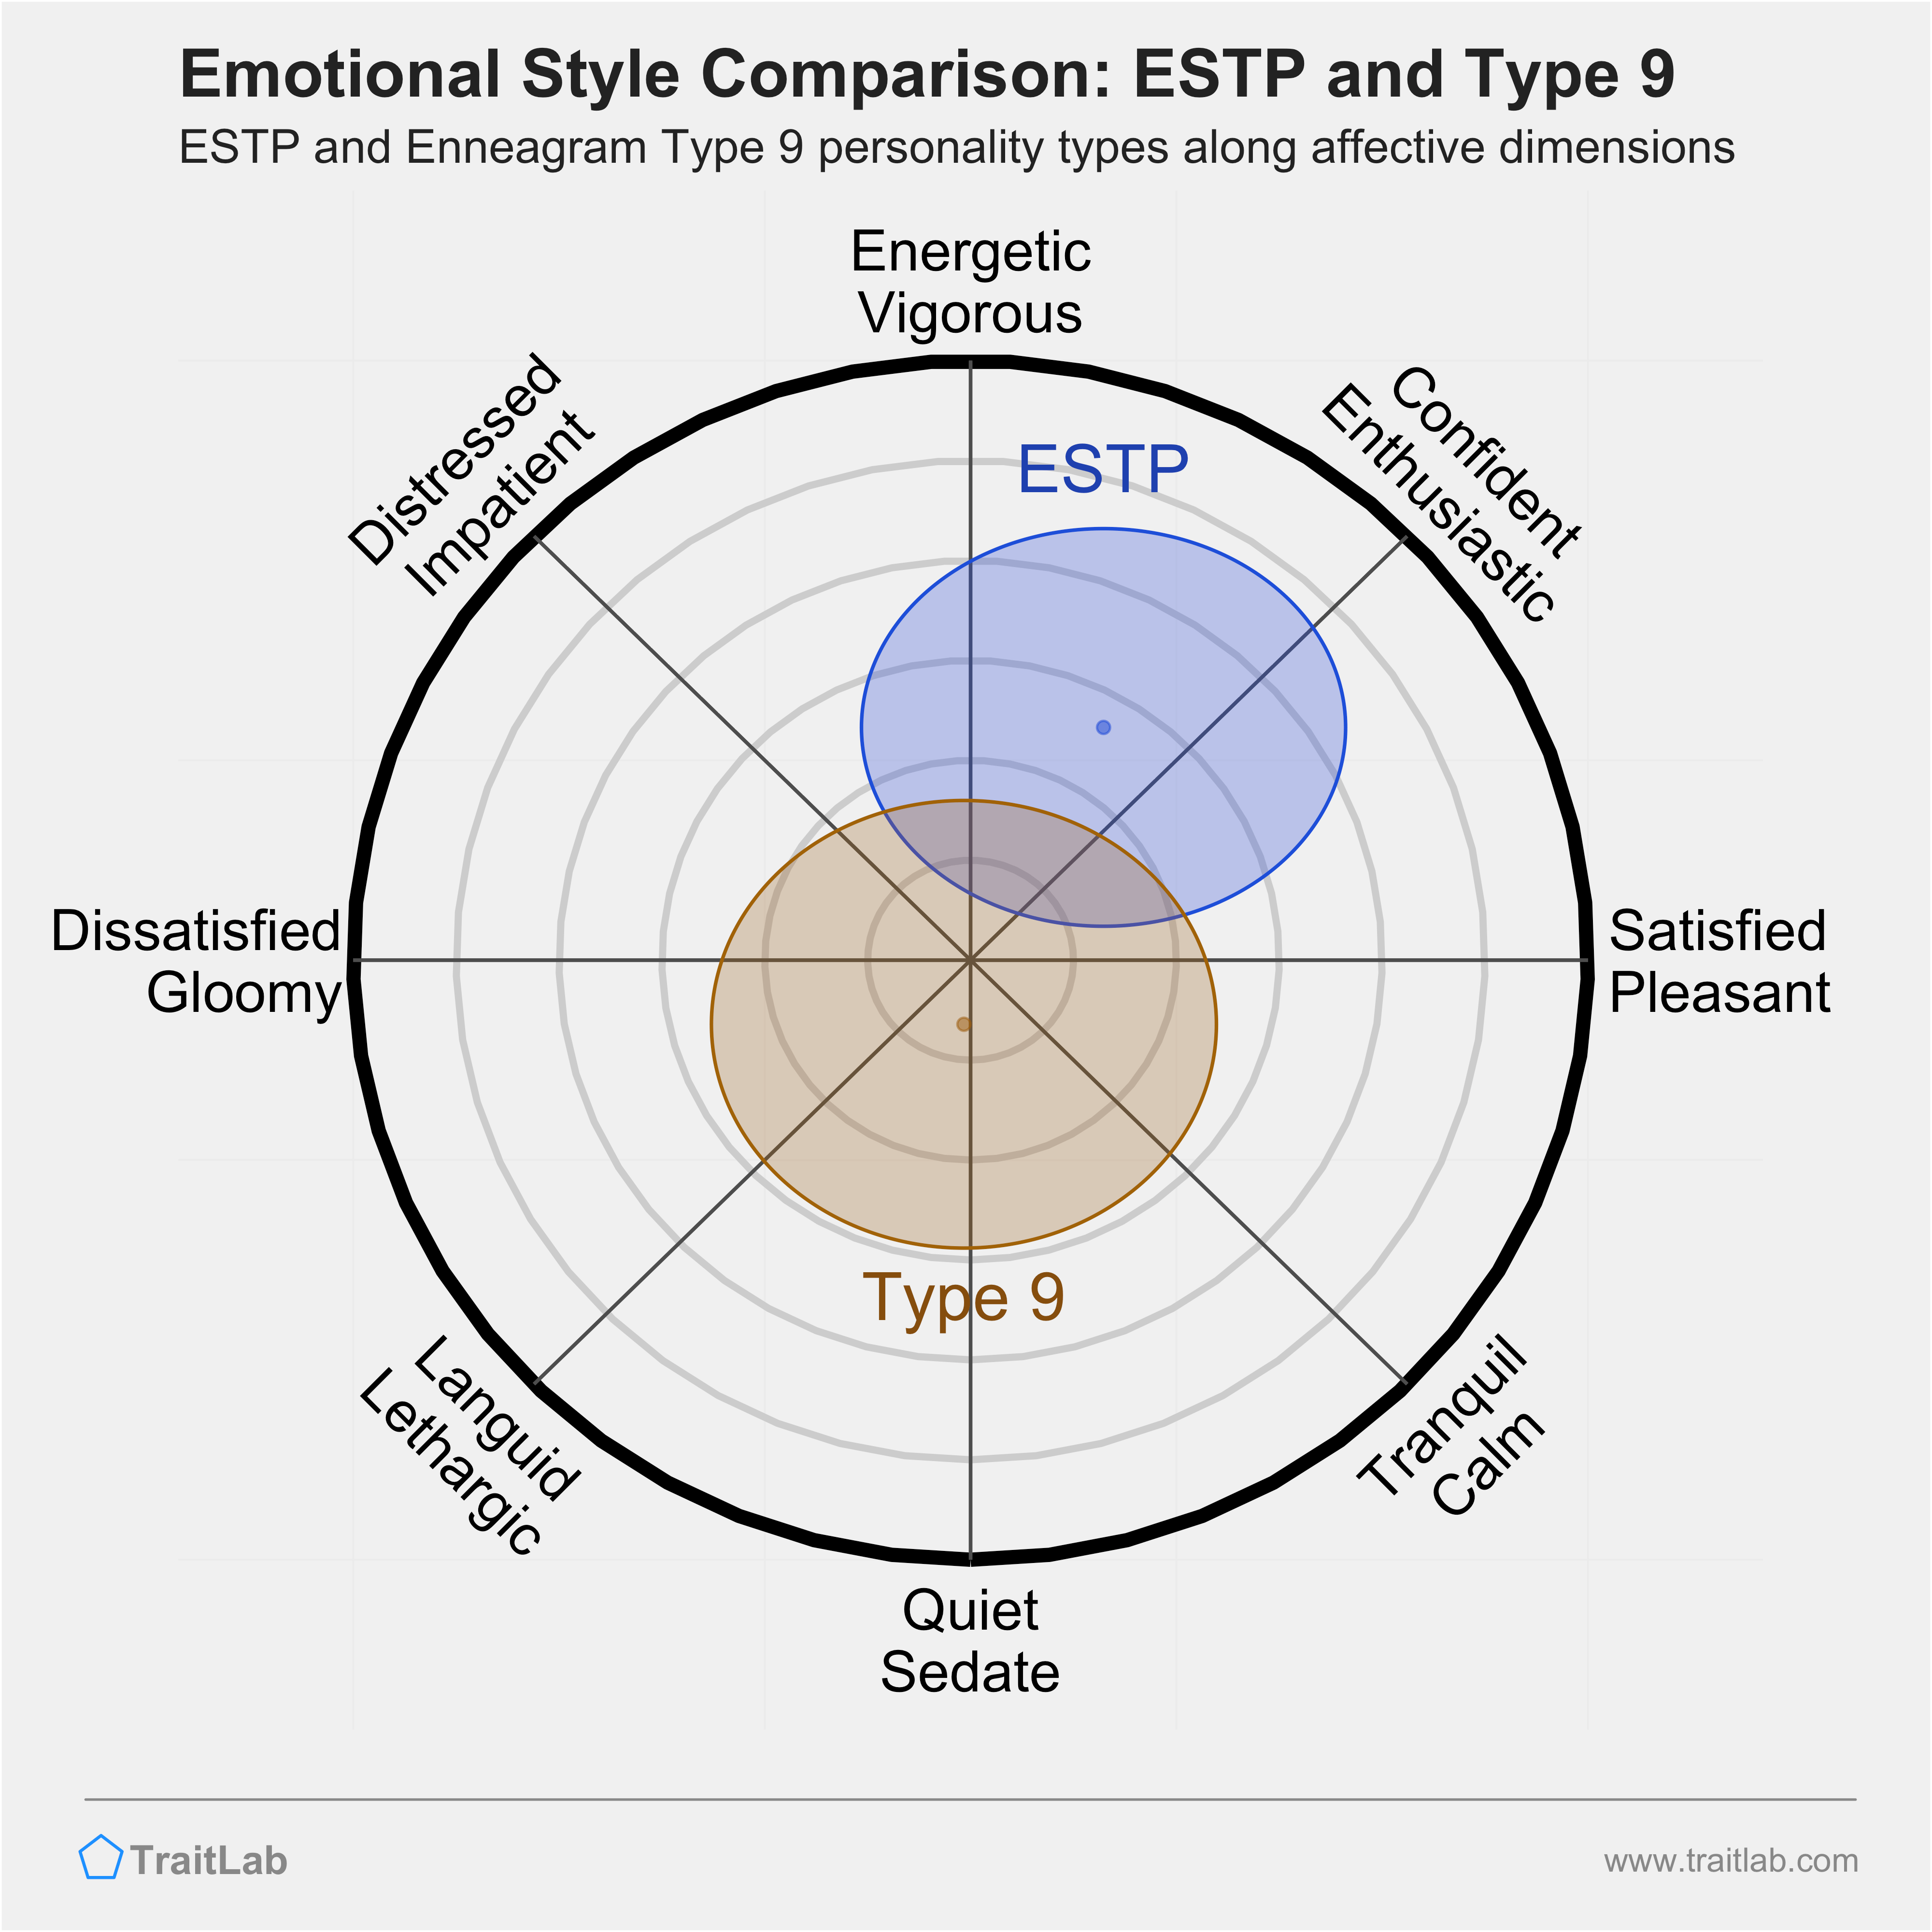 ESTP and Type 9 comparison across emotional (affective) dimensions